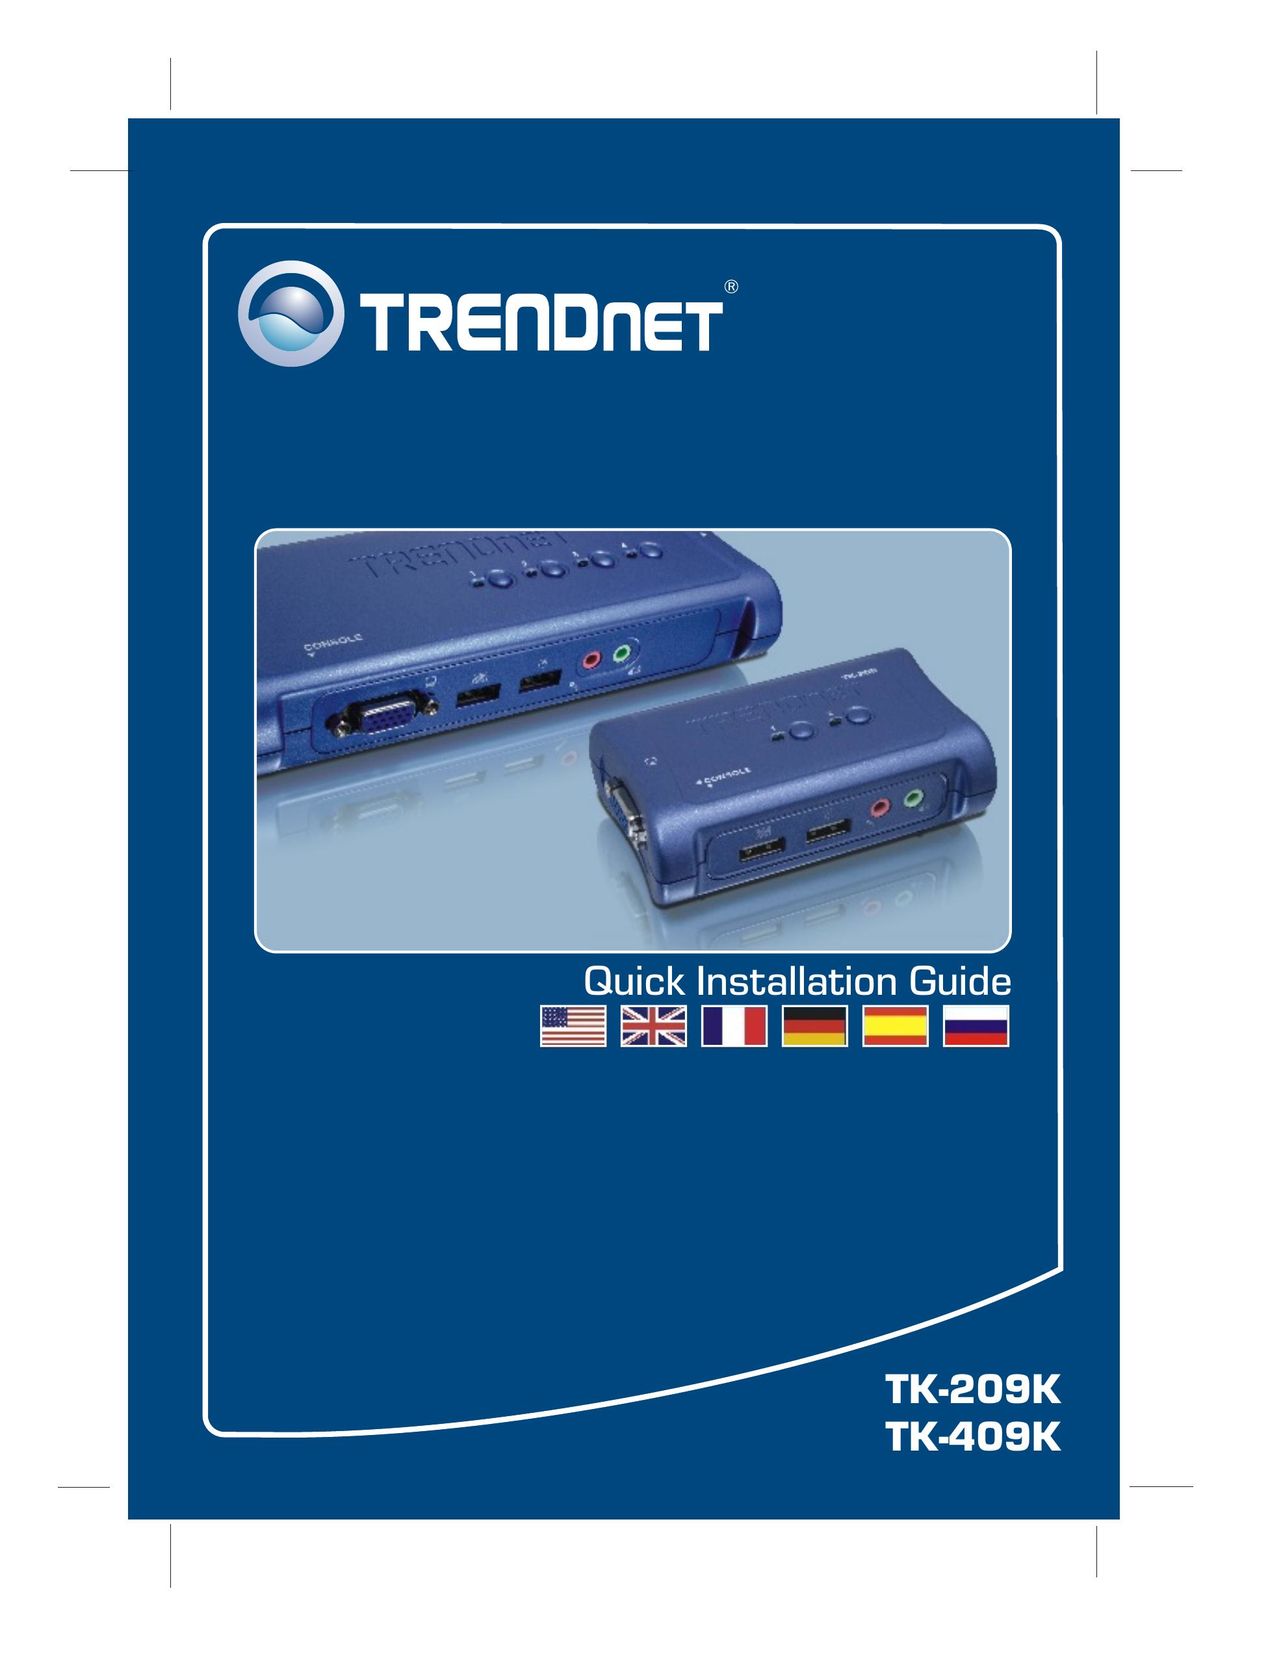 TRENDnet TK-209K Modem User Manual